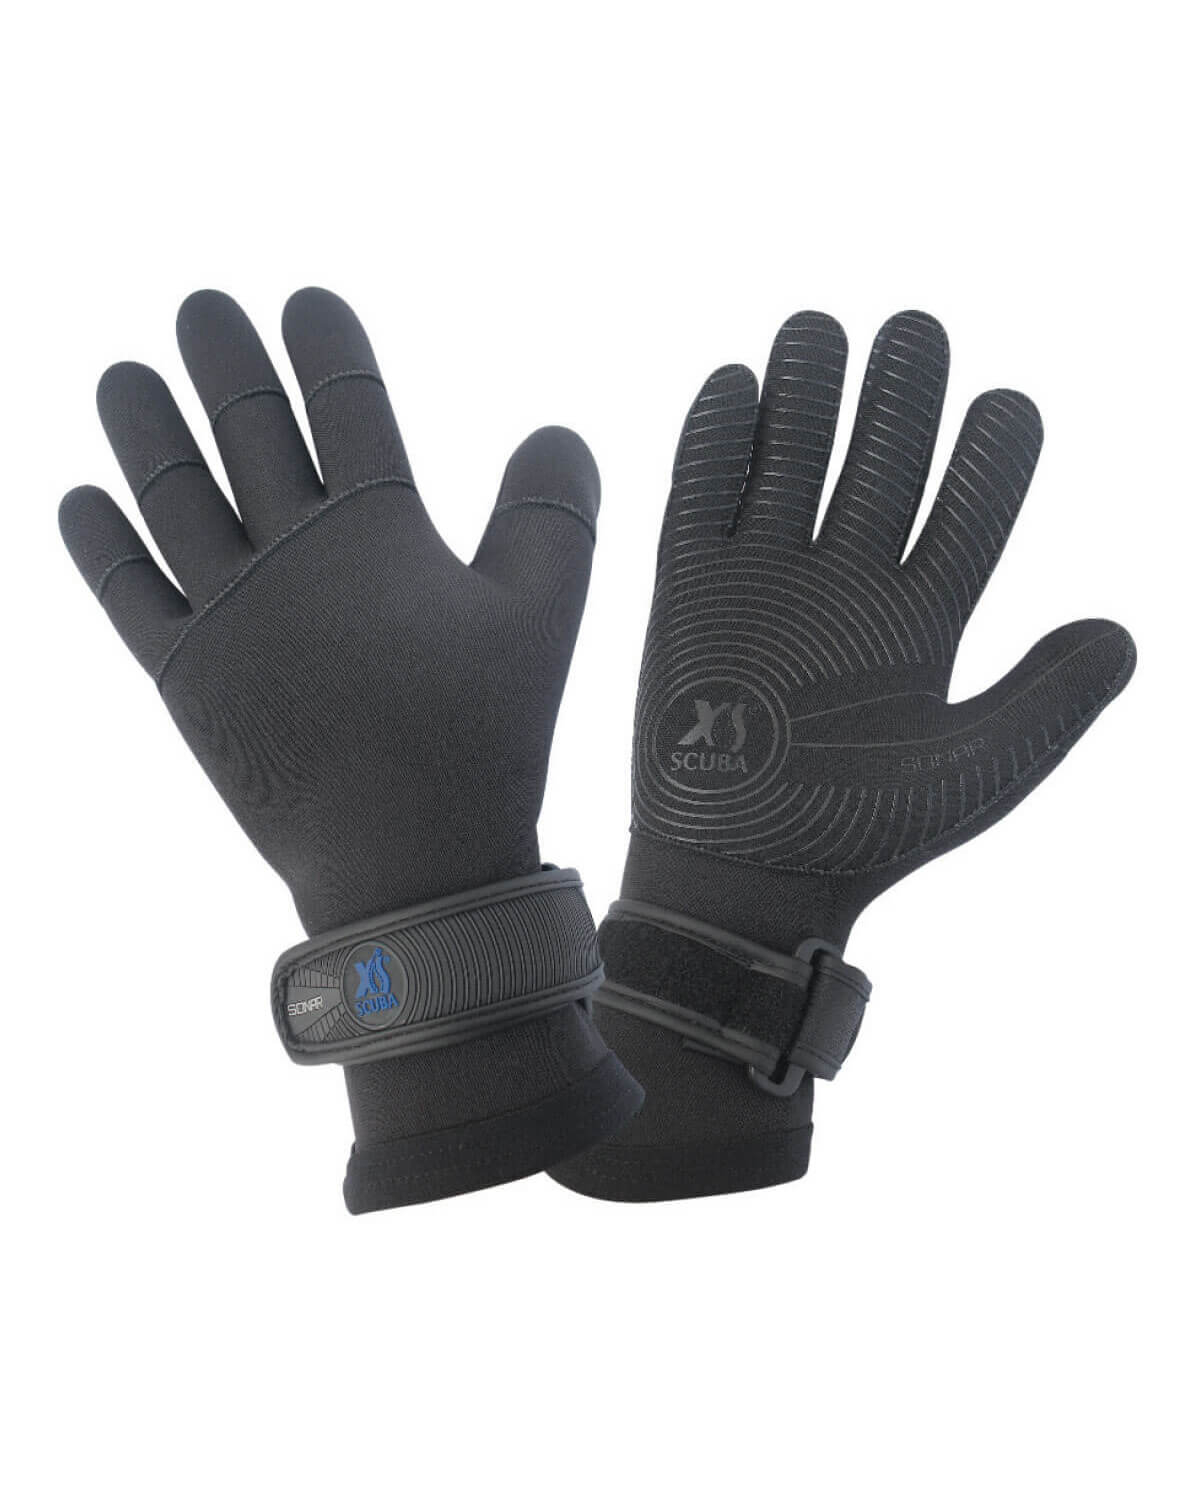 3mm XS SCUBA Sonar Wetsuit Gloves